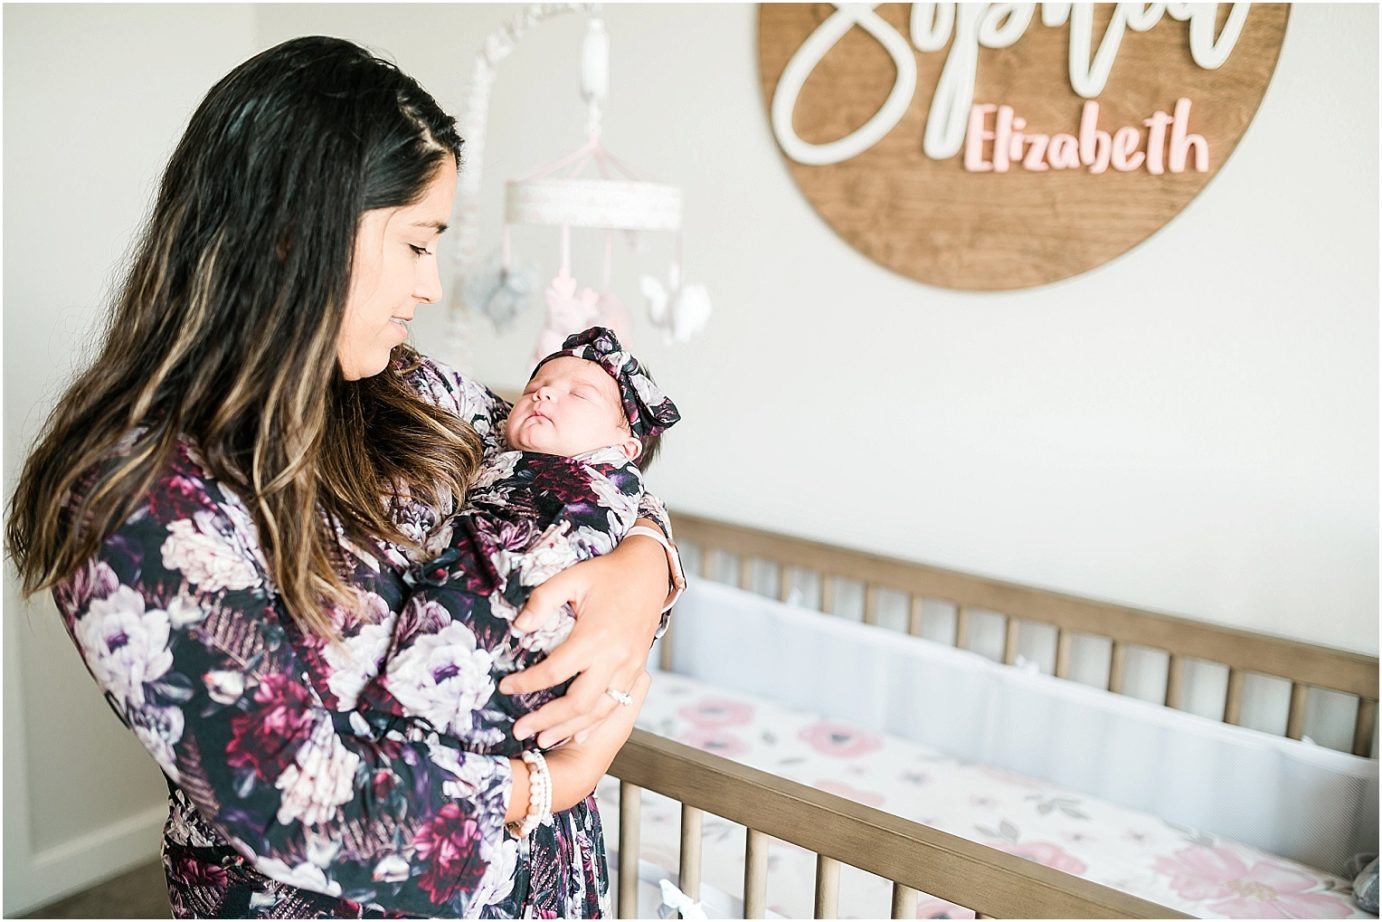 Lifestyle Newborn Session Sophia Elizabeth 11 days new mom with baby